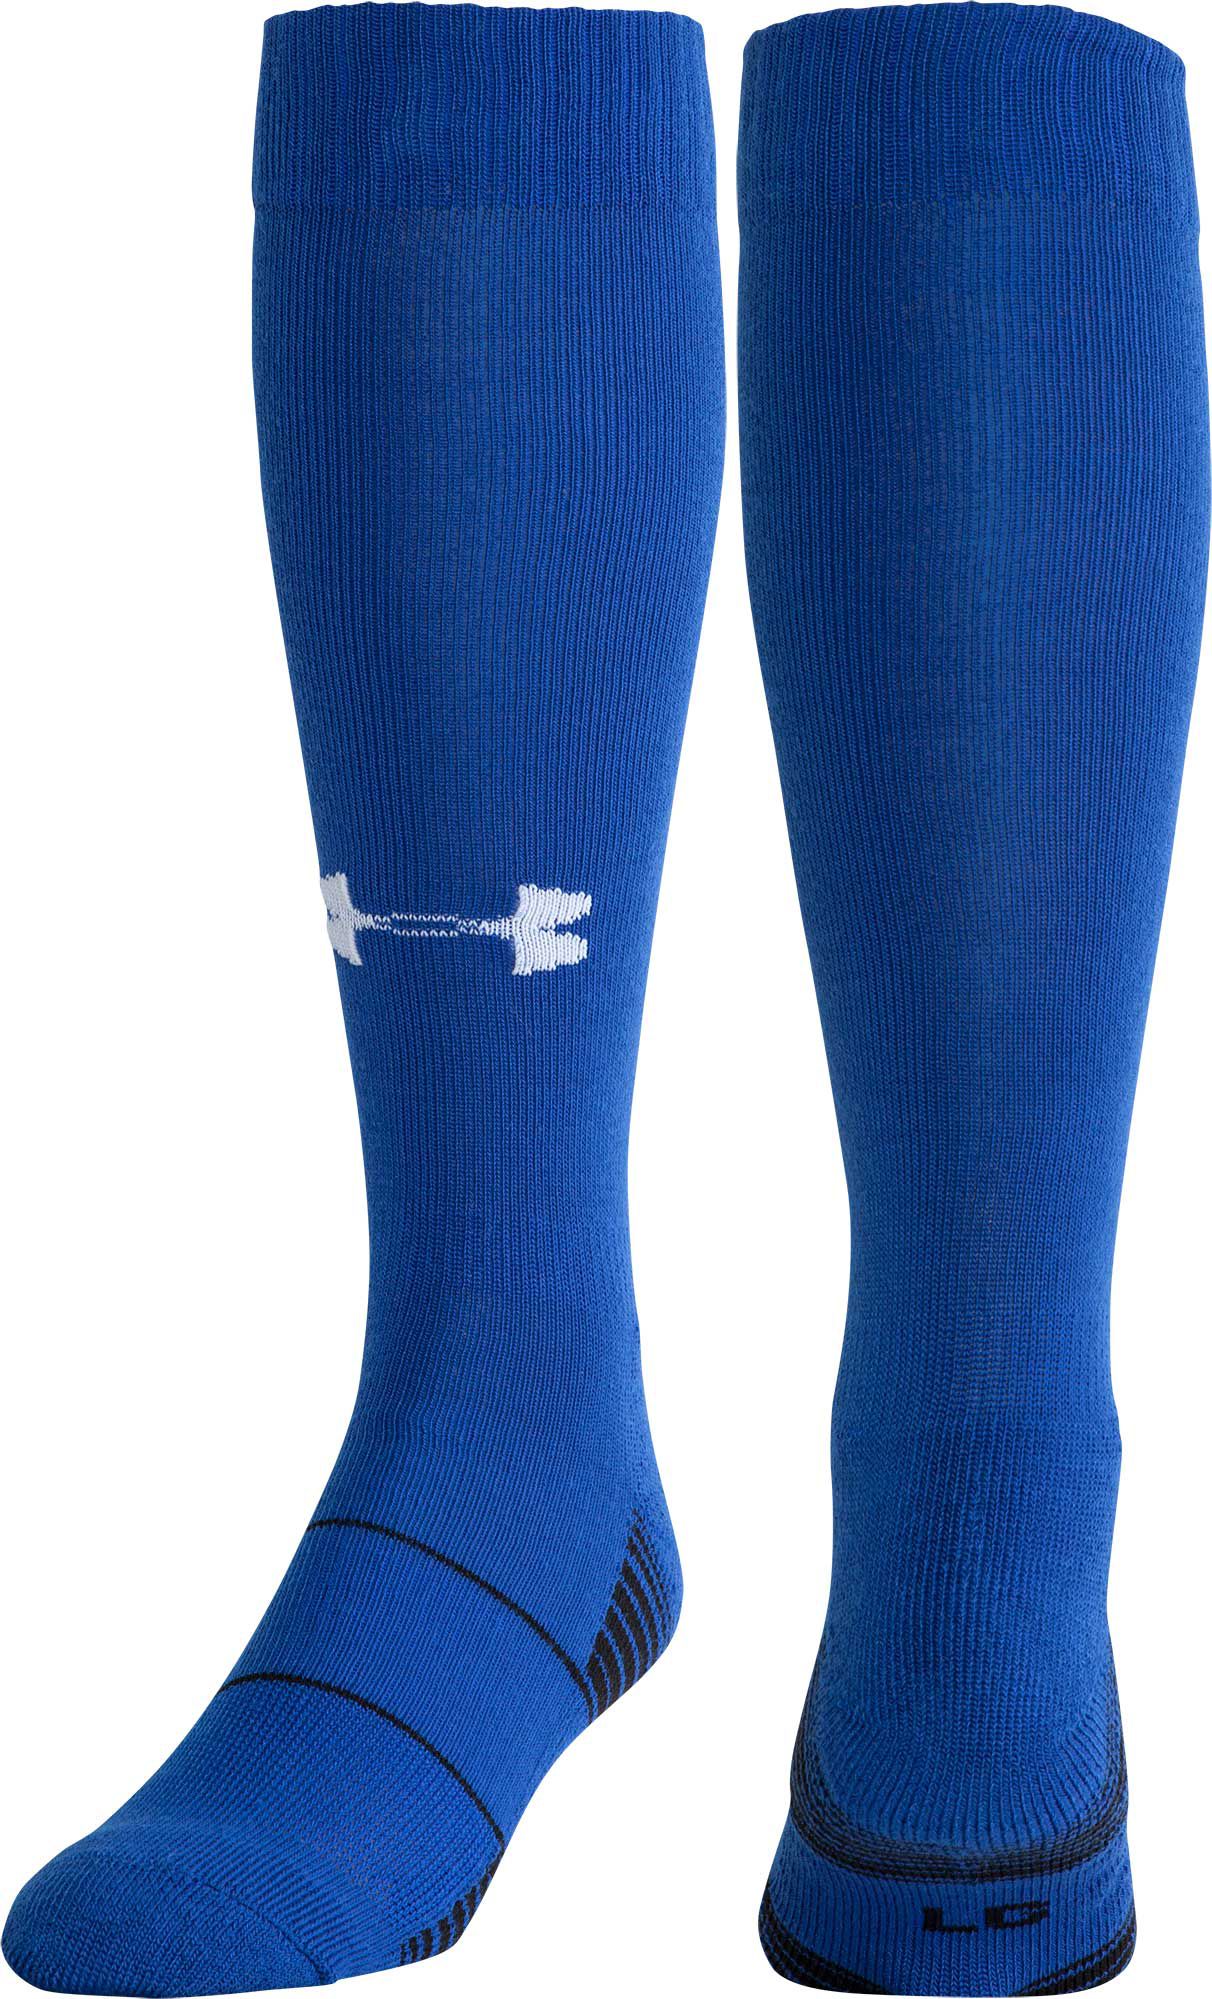 Under Armour Soccer Socks Size